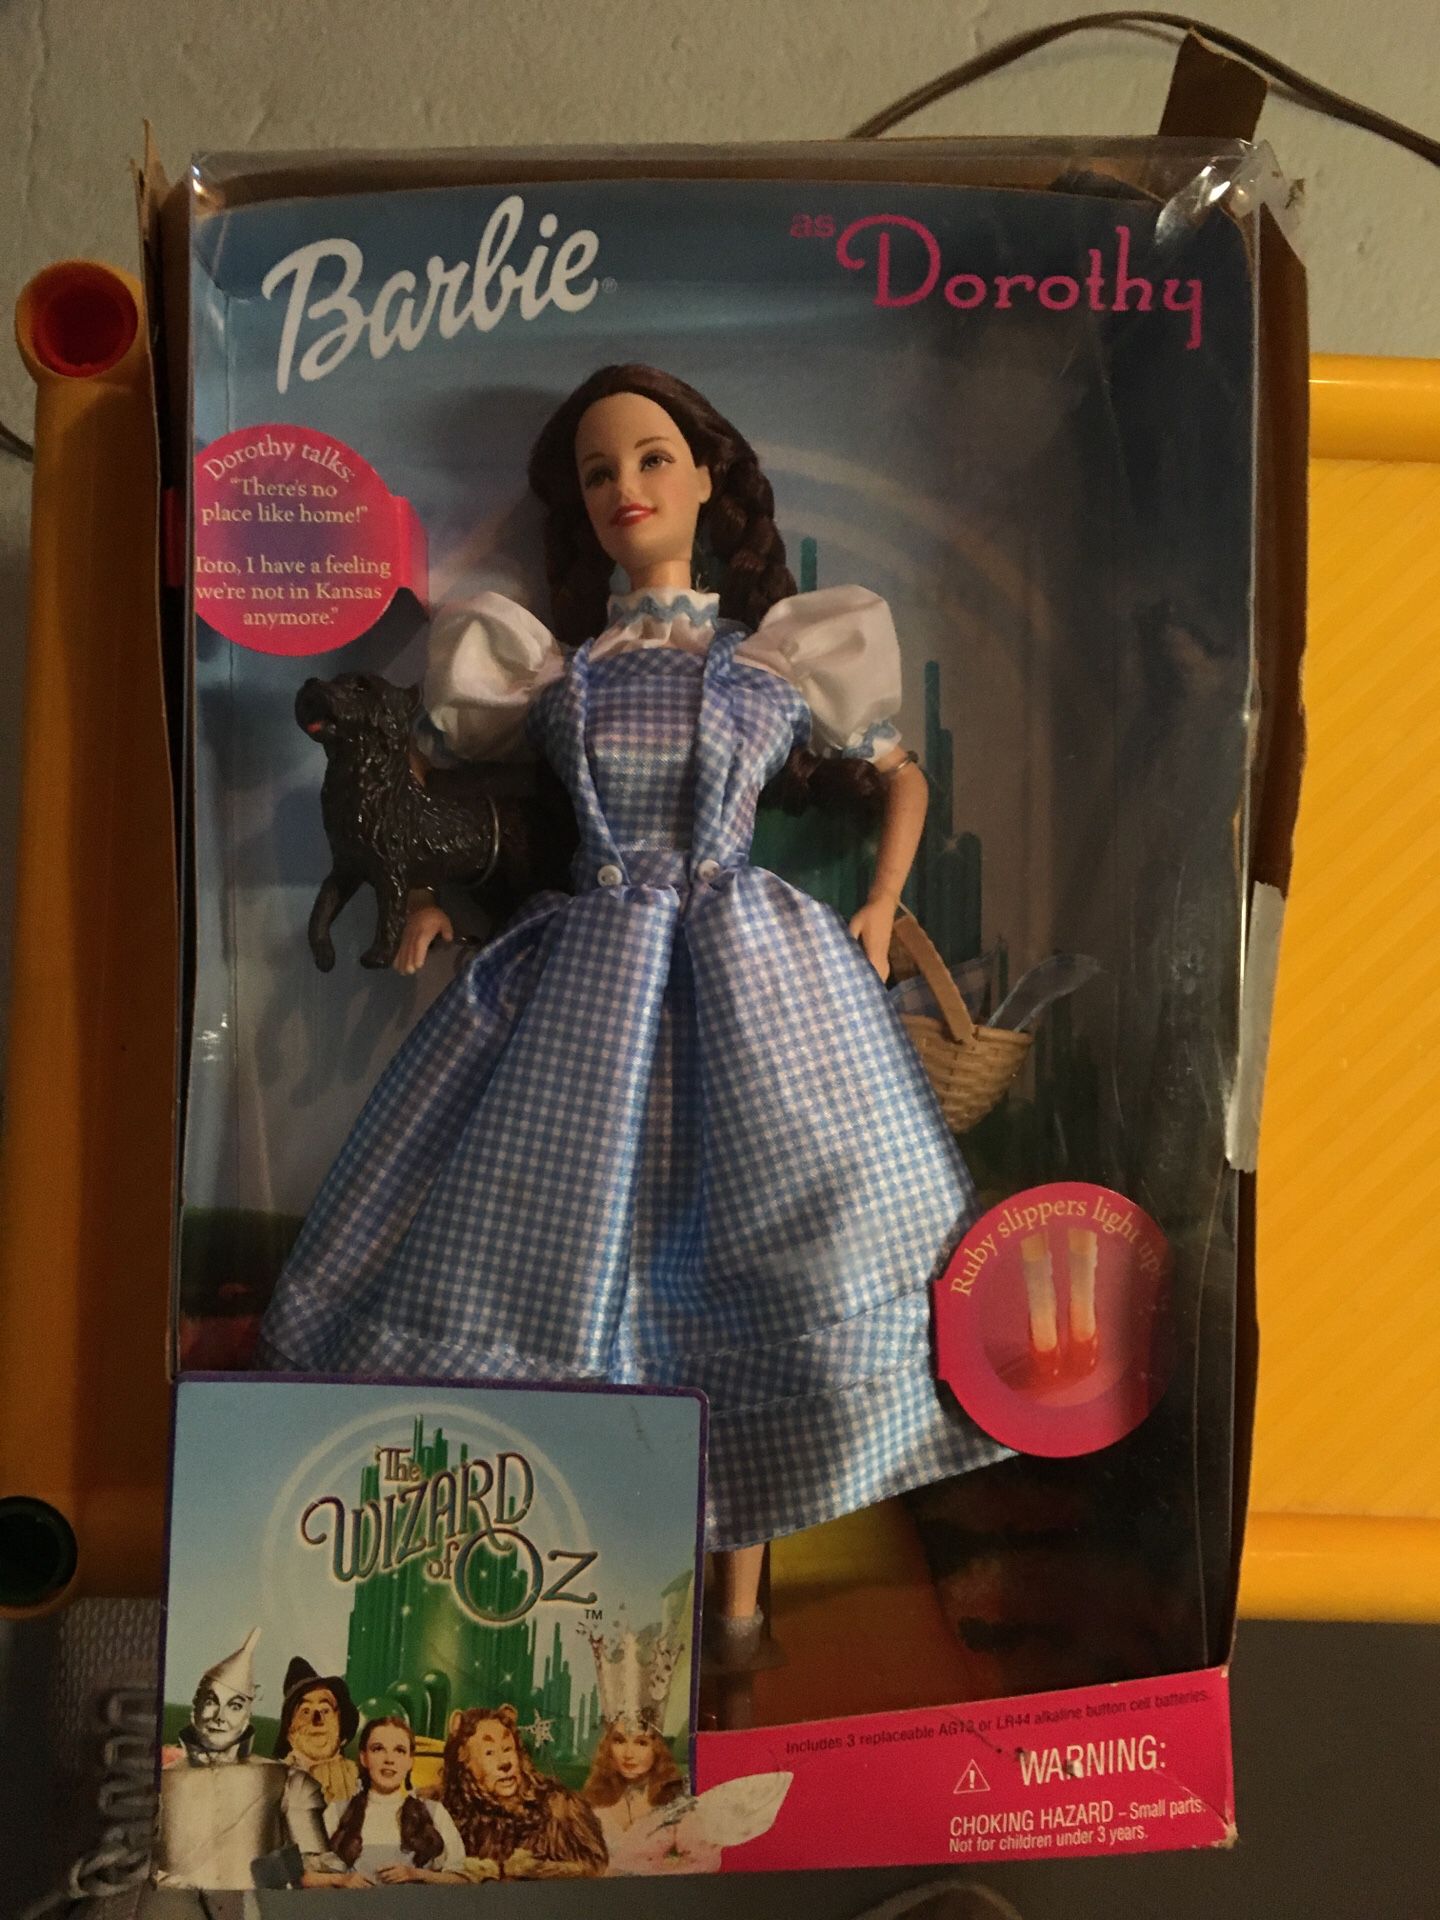 Barbie as Dorothy in Wizard of Oz